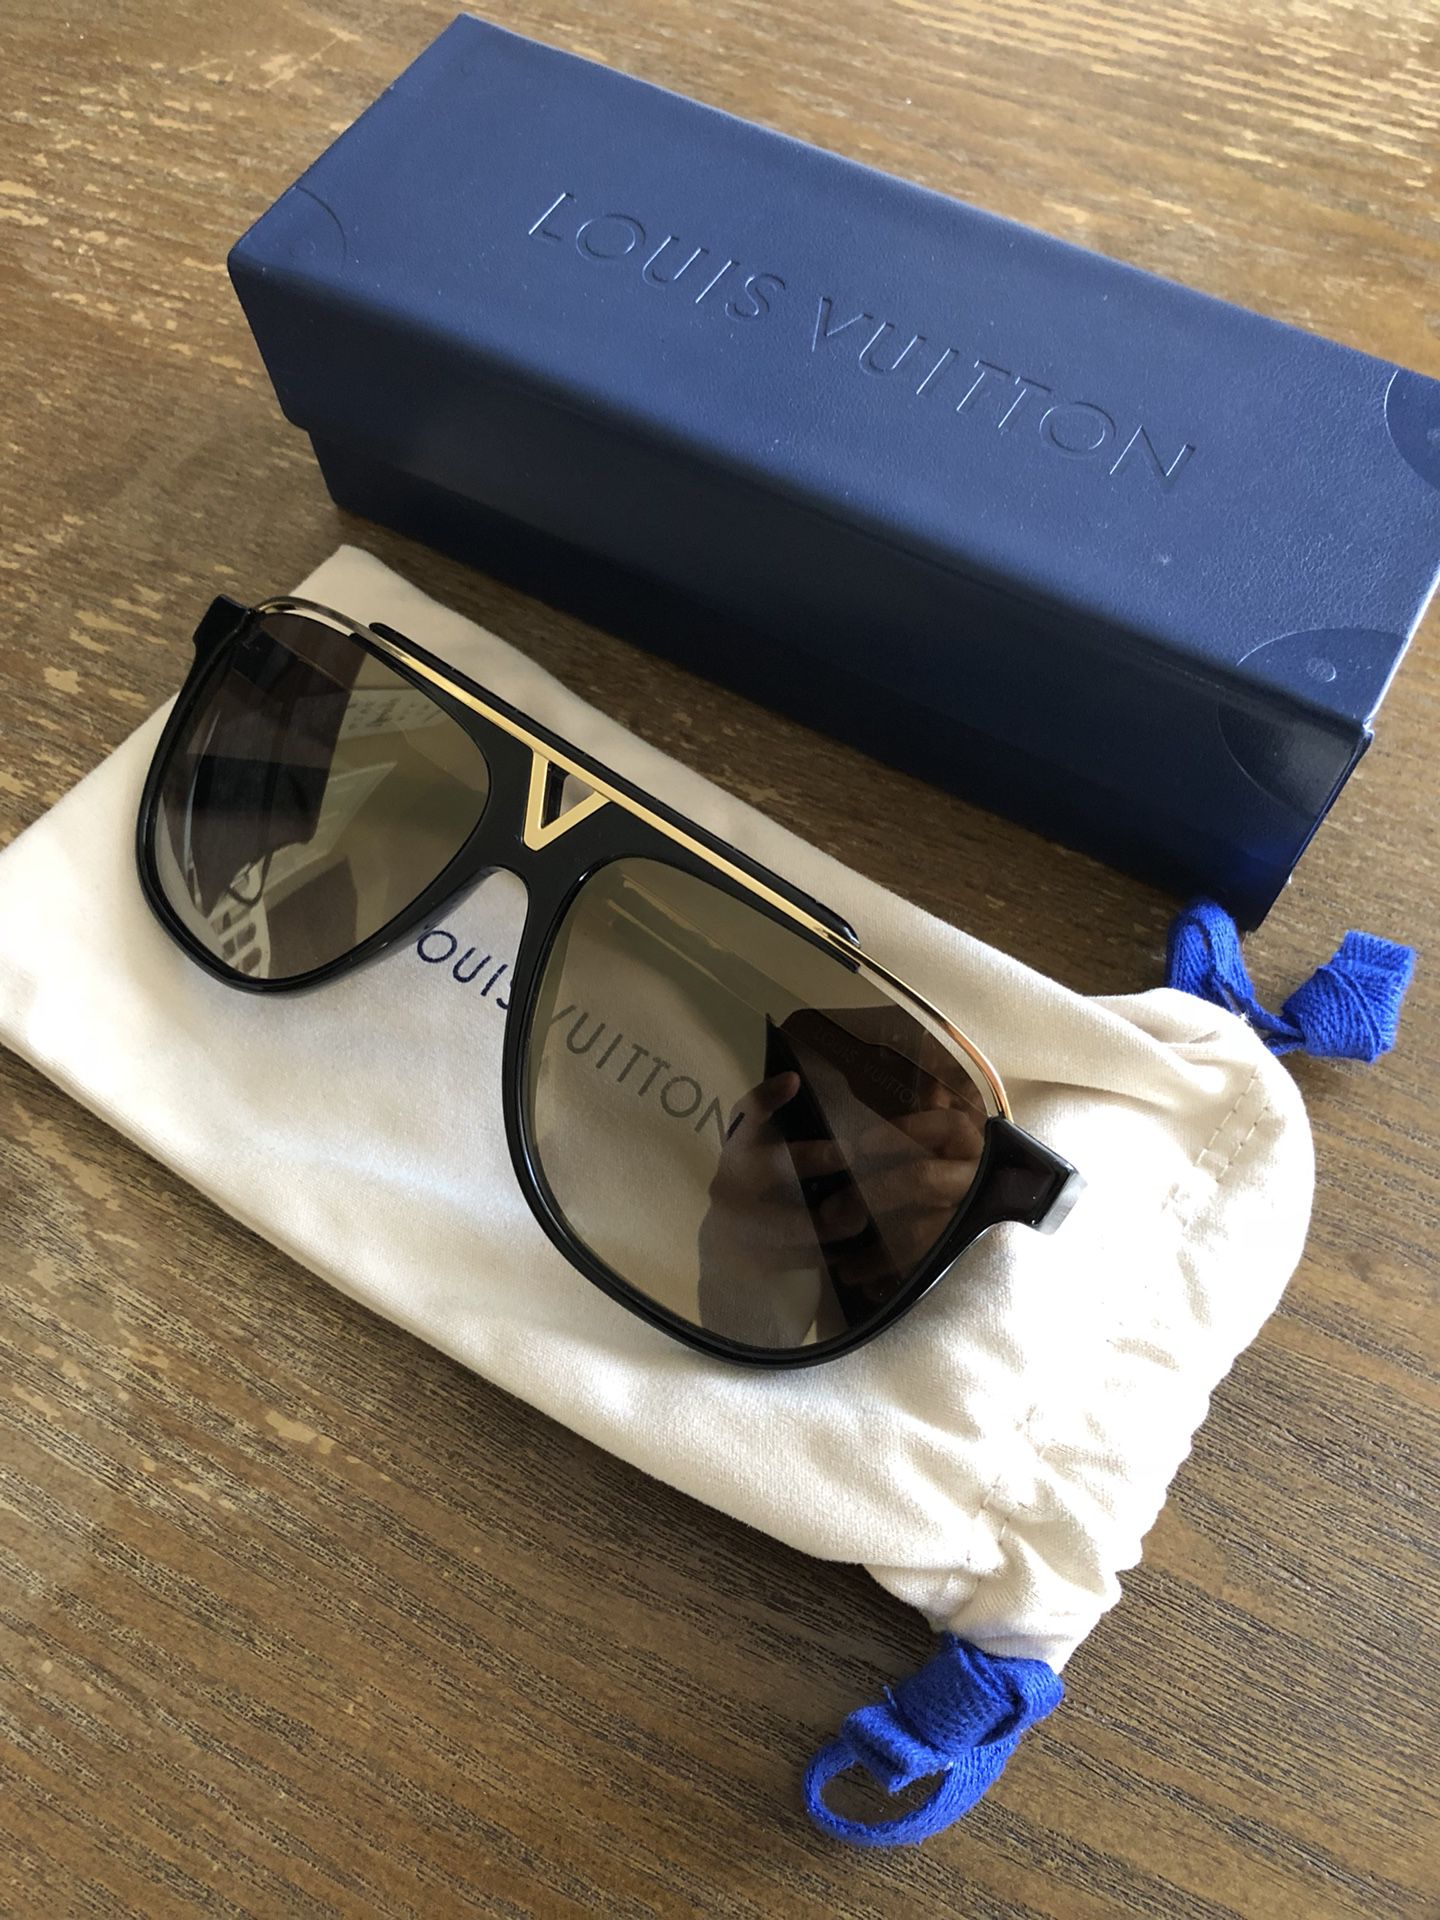 Louis Vuitton 2017 Mascot Sunglasses - Black Sunglasses